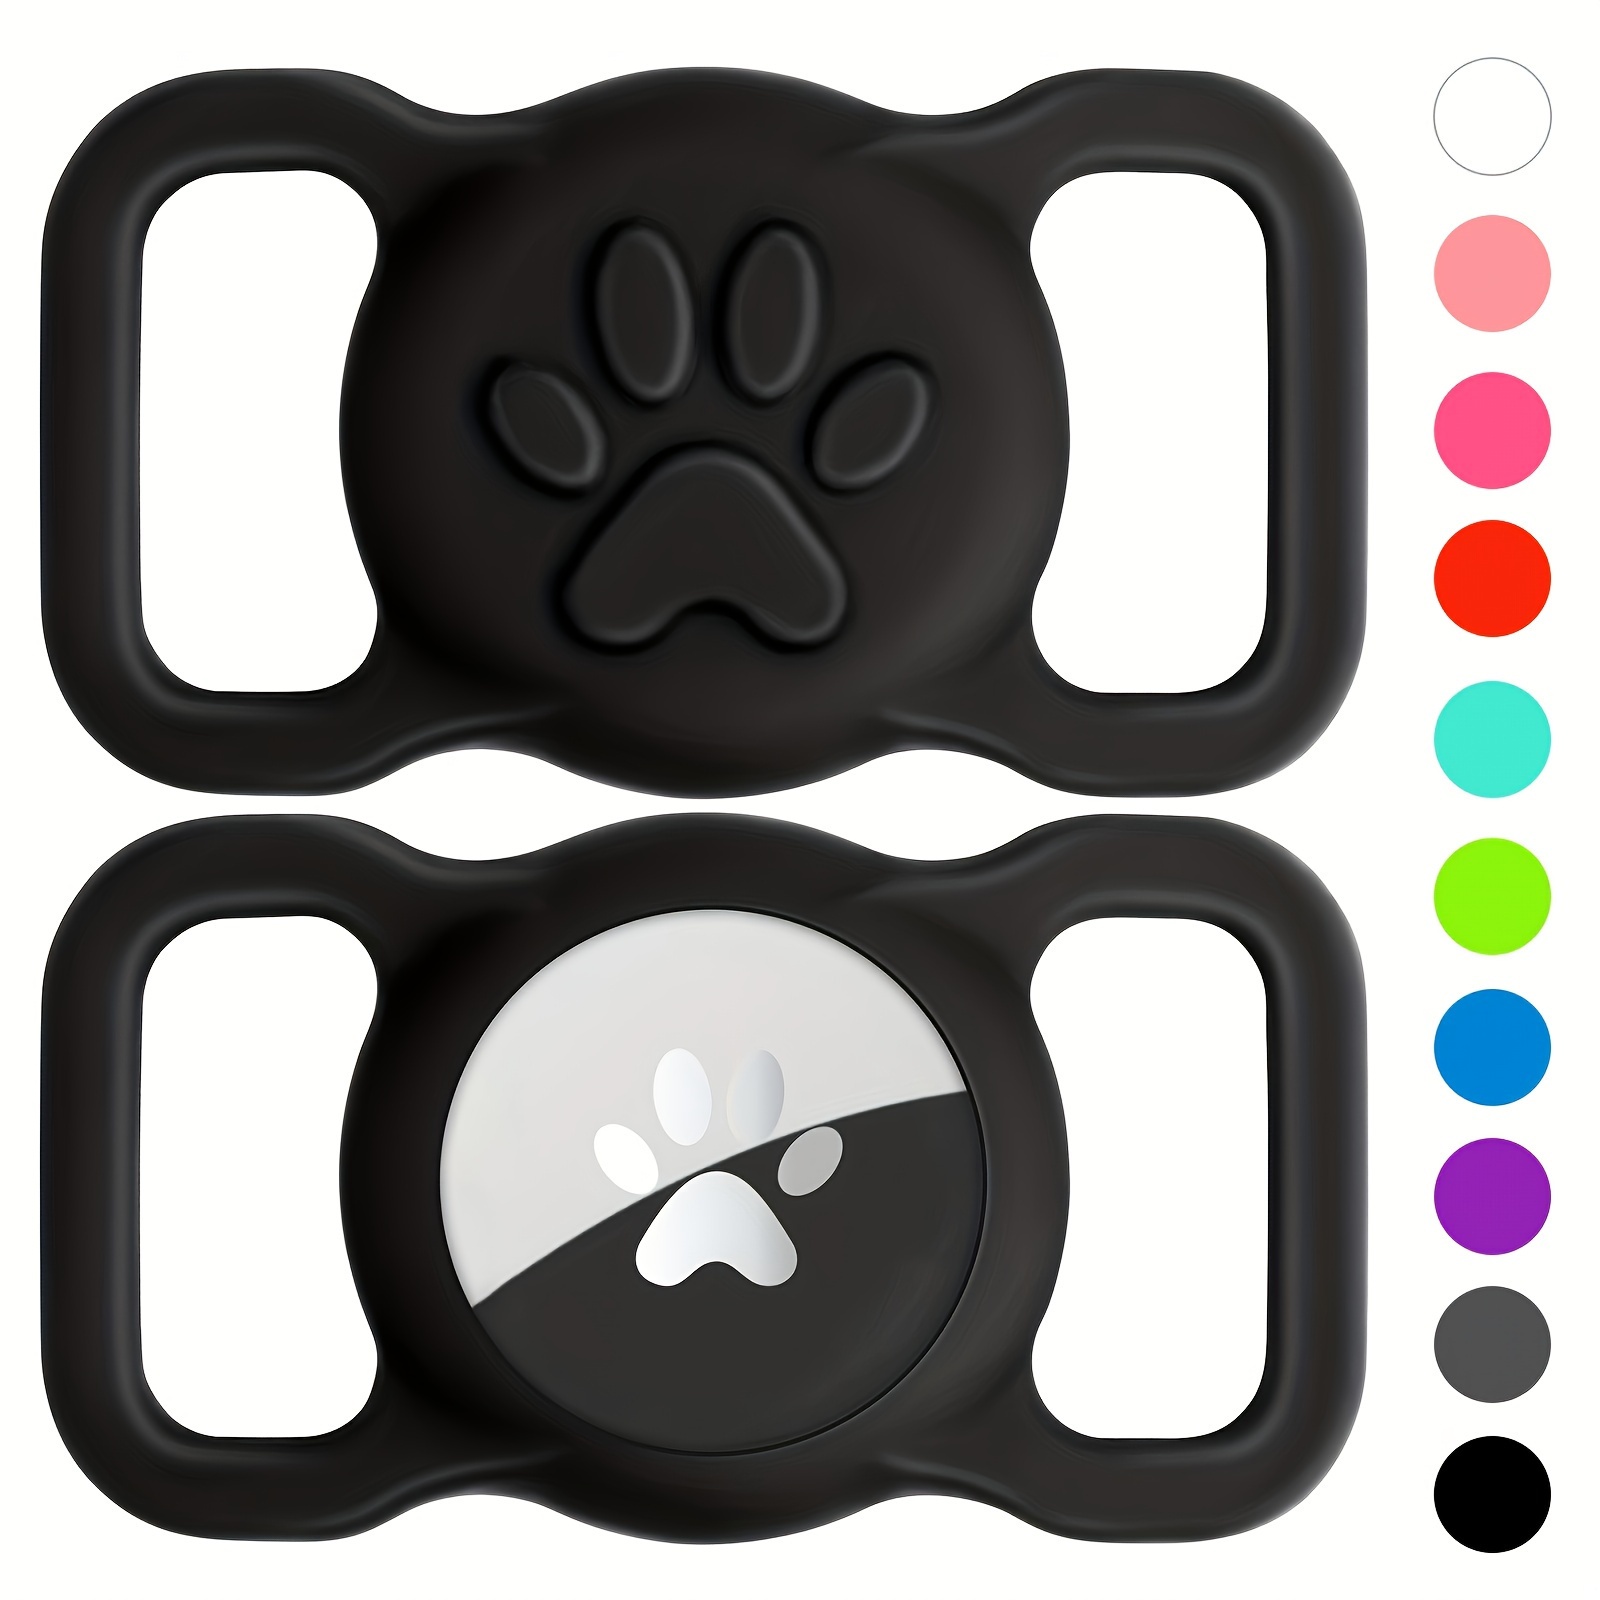 Rastreador GPS inteligente para mascotas, mini rastreador Bluetooth  impermeable antipérdida, localizador Bluetooth para mascotas, perros,  gatos, niños, cartera de automóvil, accesorios para collar de llave (verde)  